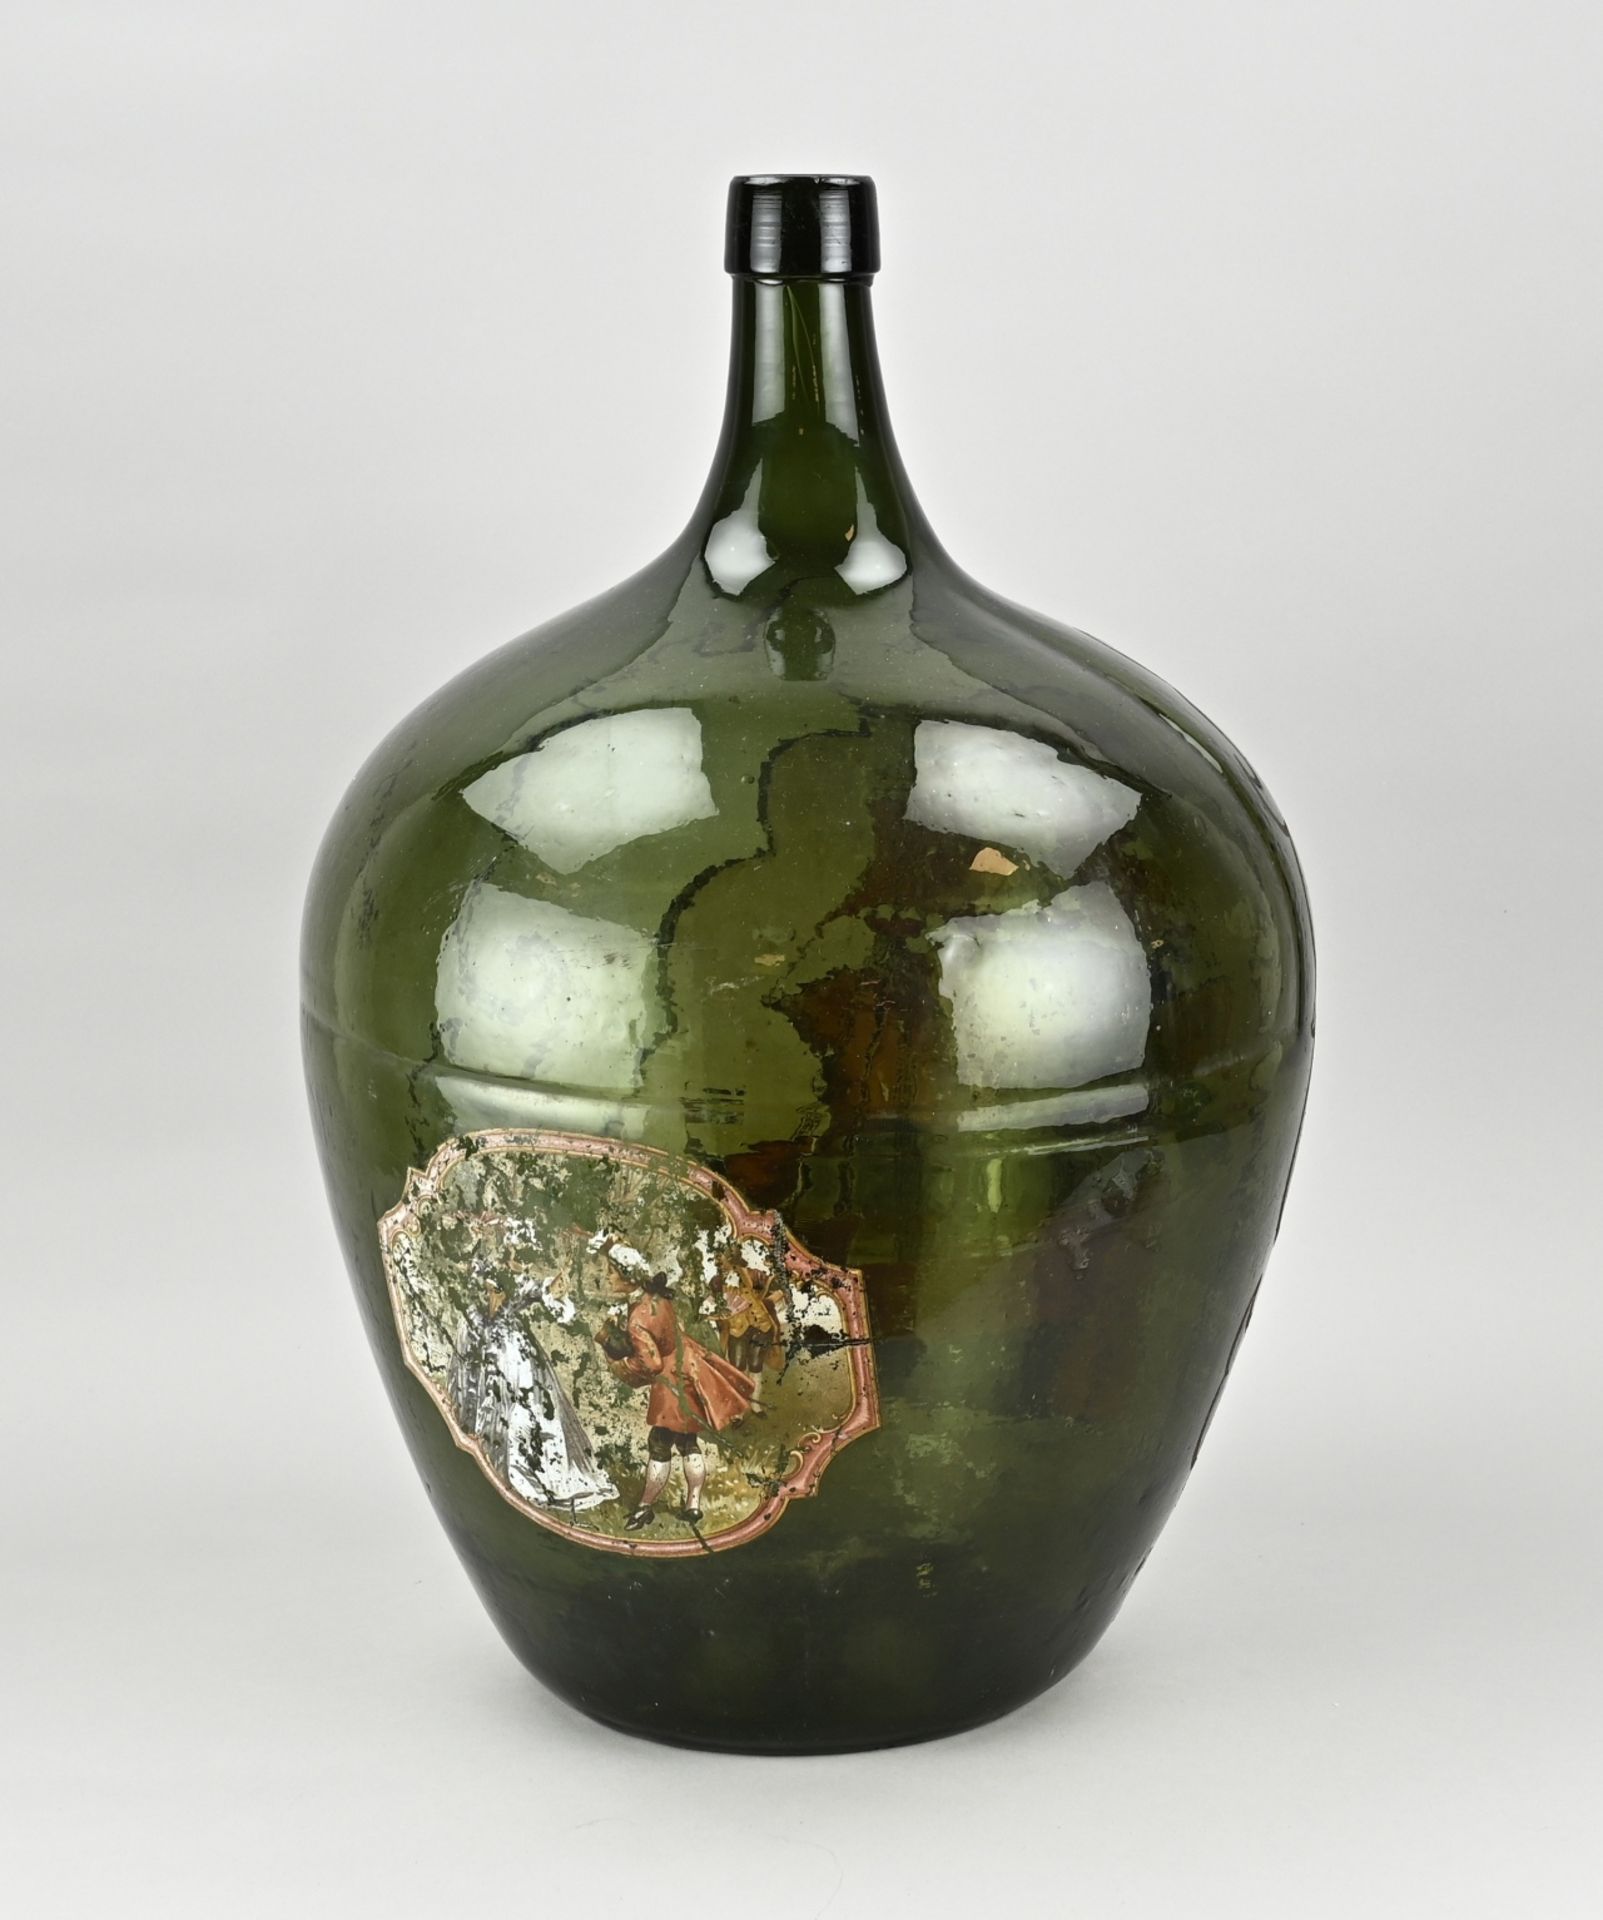 Antique glass storage bottle, H 55 cm. - Image 2 of 2